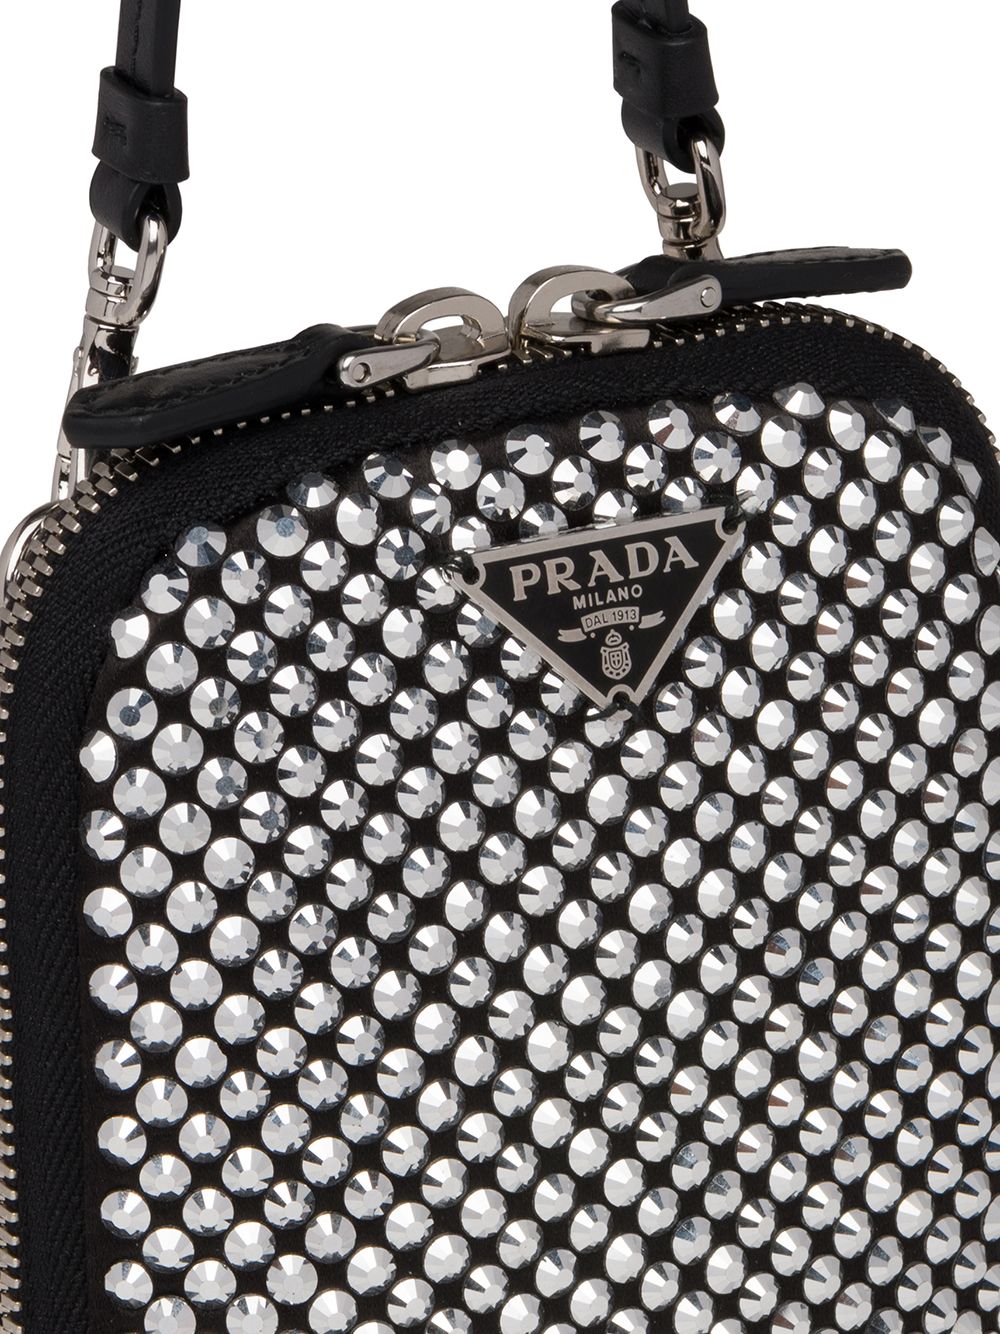 фото Prada сумка с логотипом и стразами